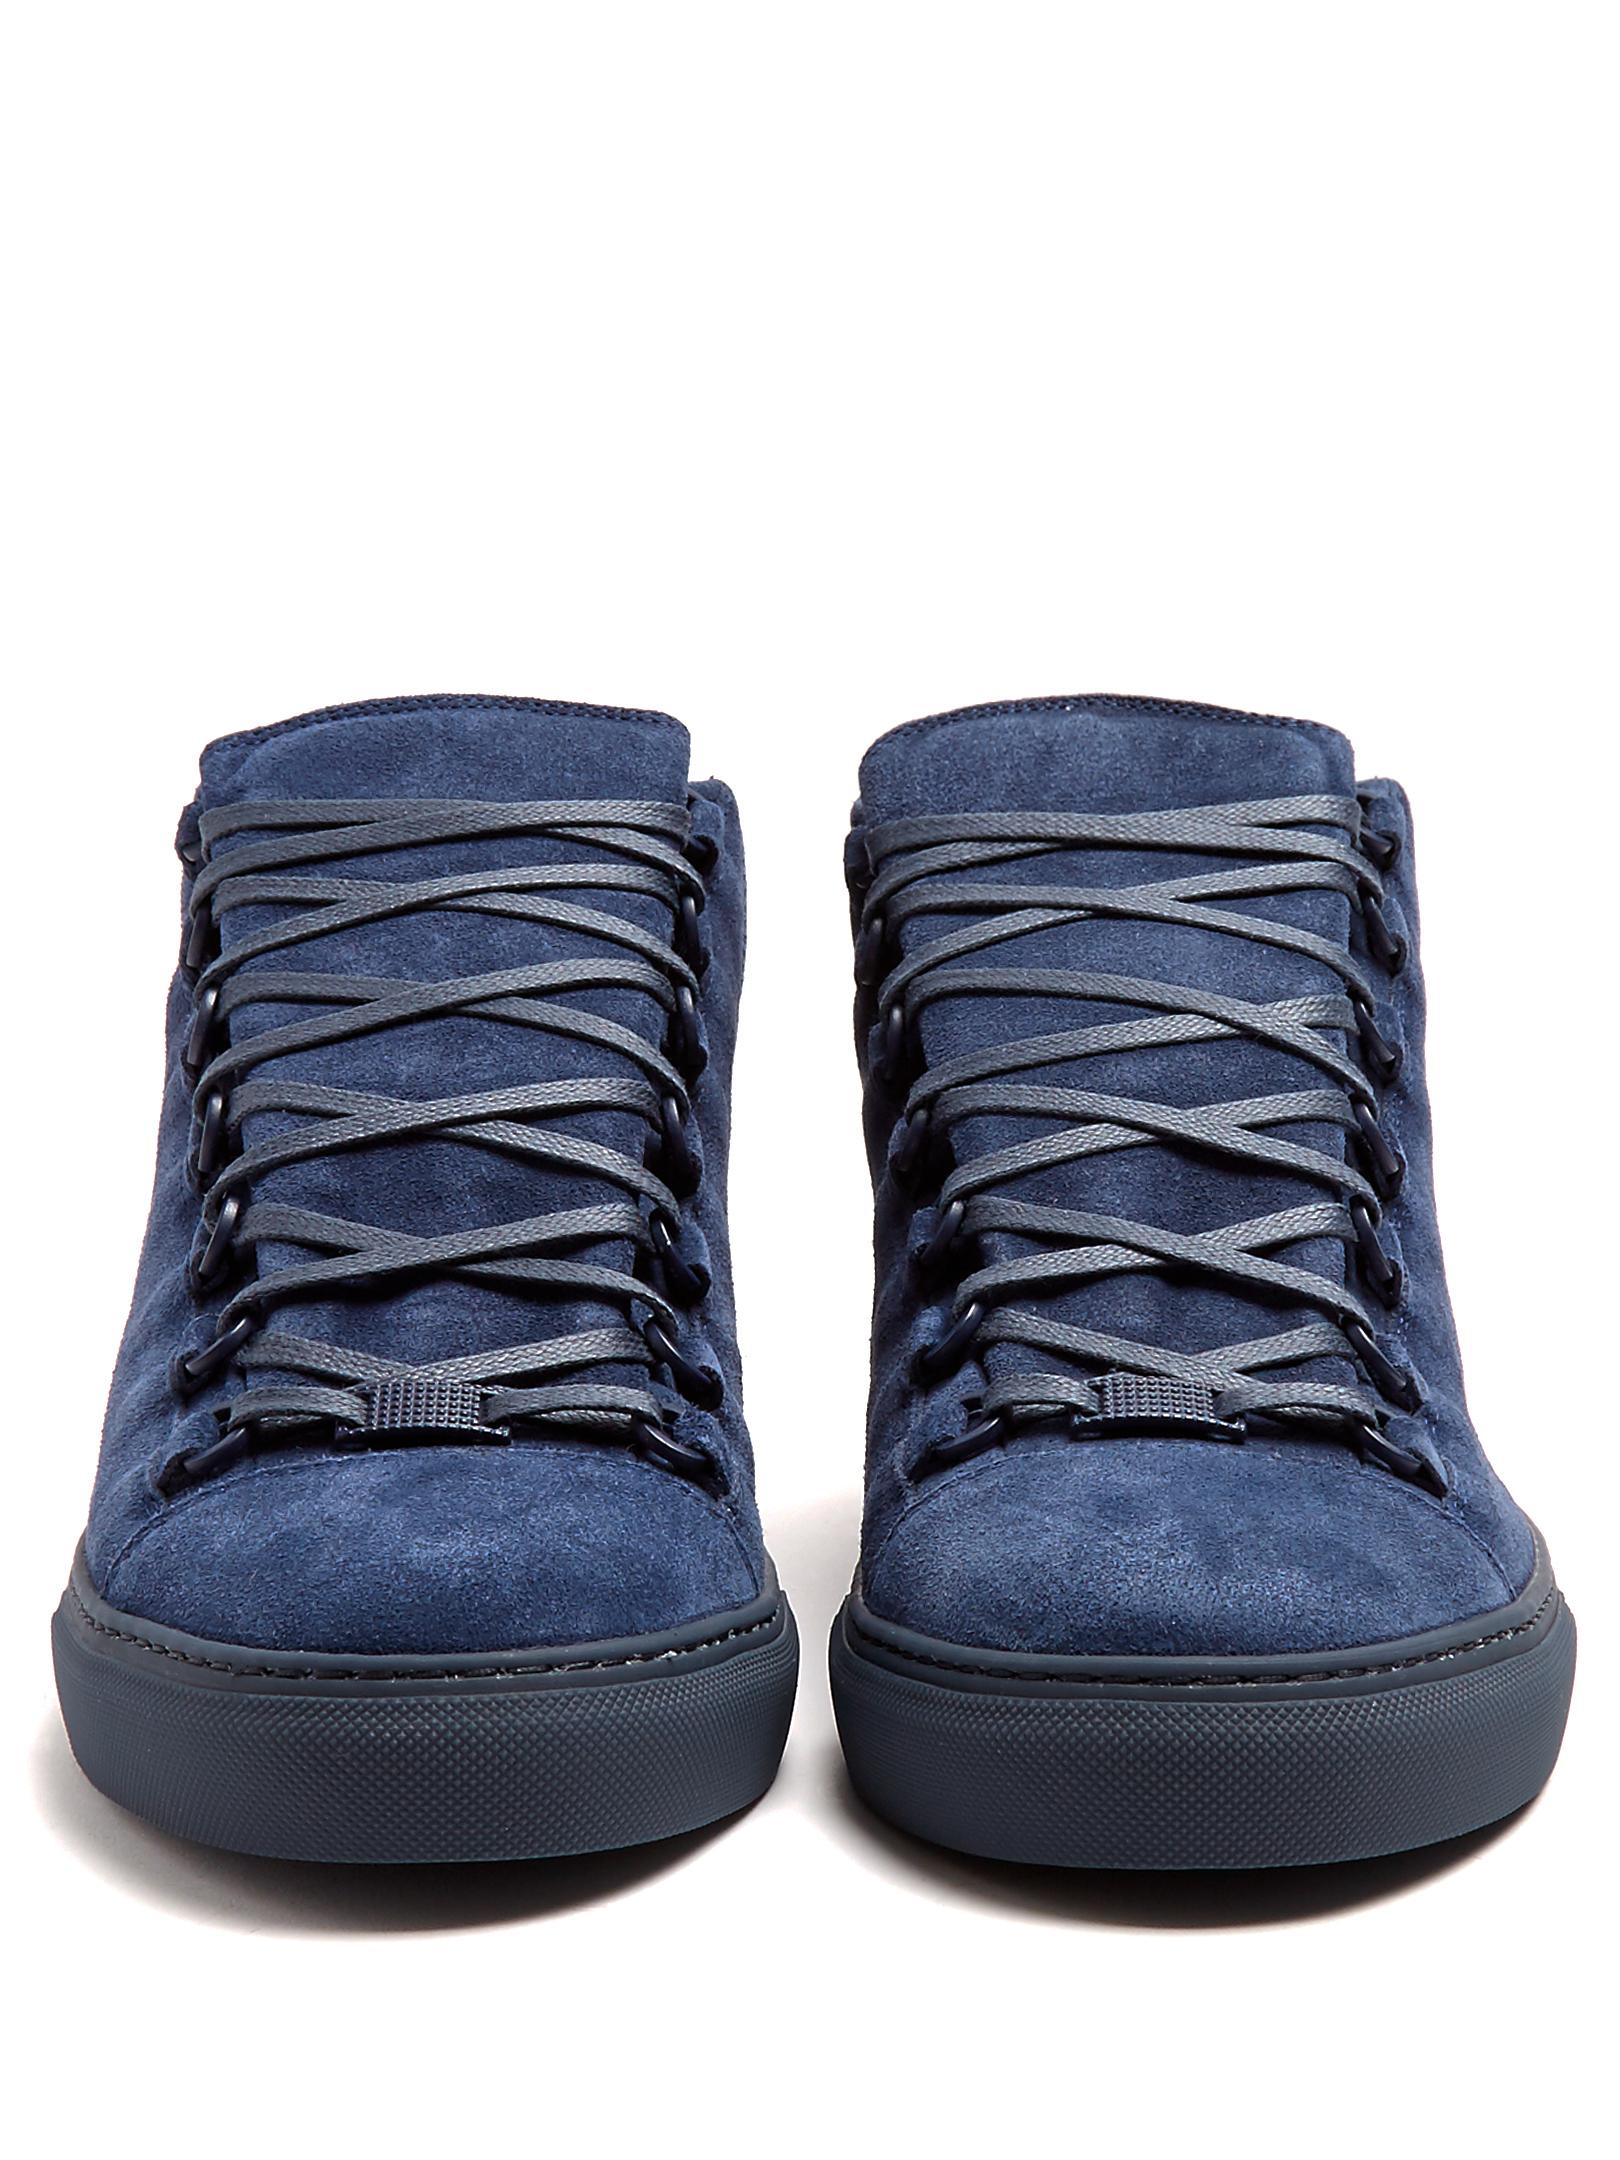 blue suede balenciaga sneakers